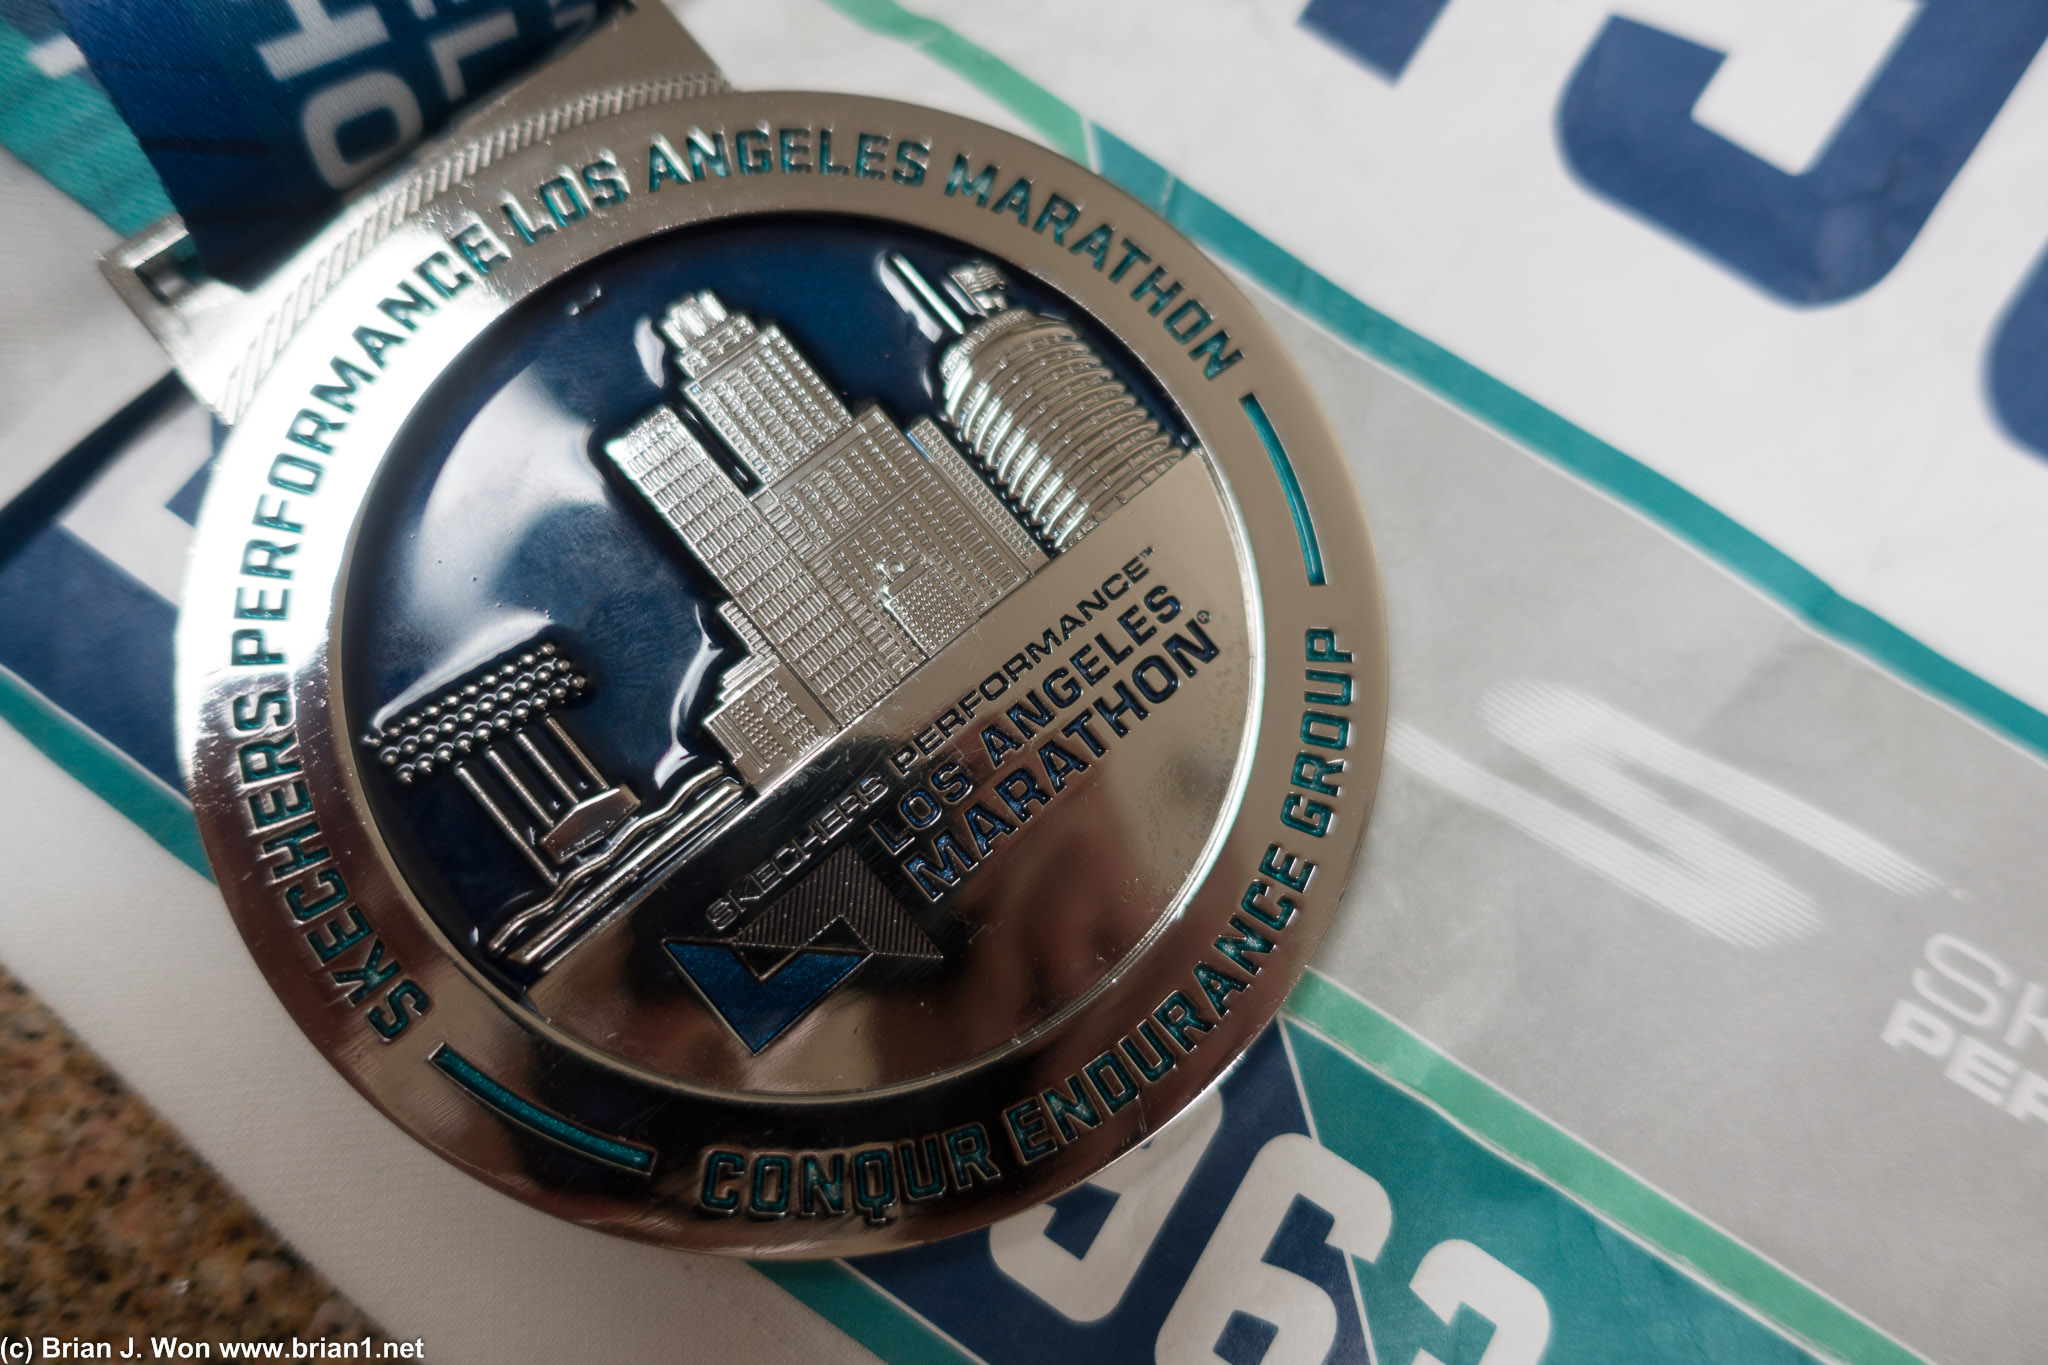 LA Marathon finisher's medal.